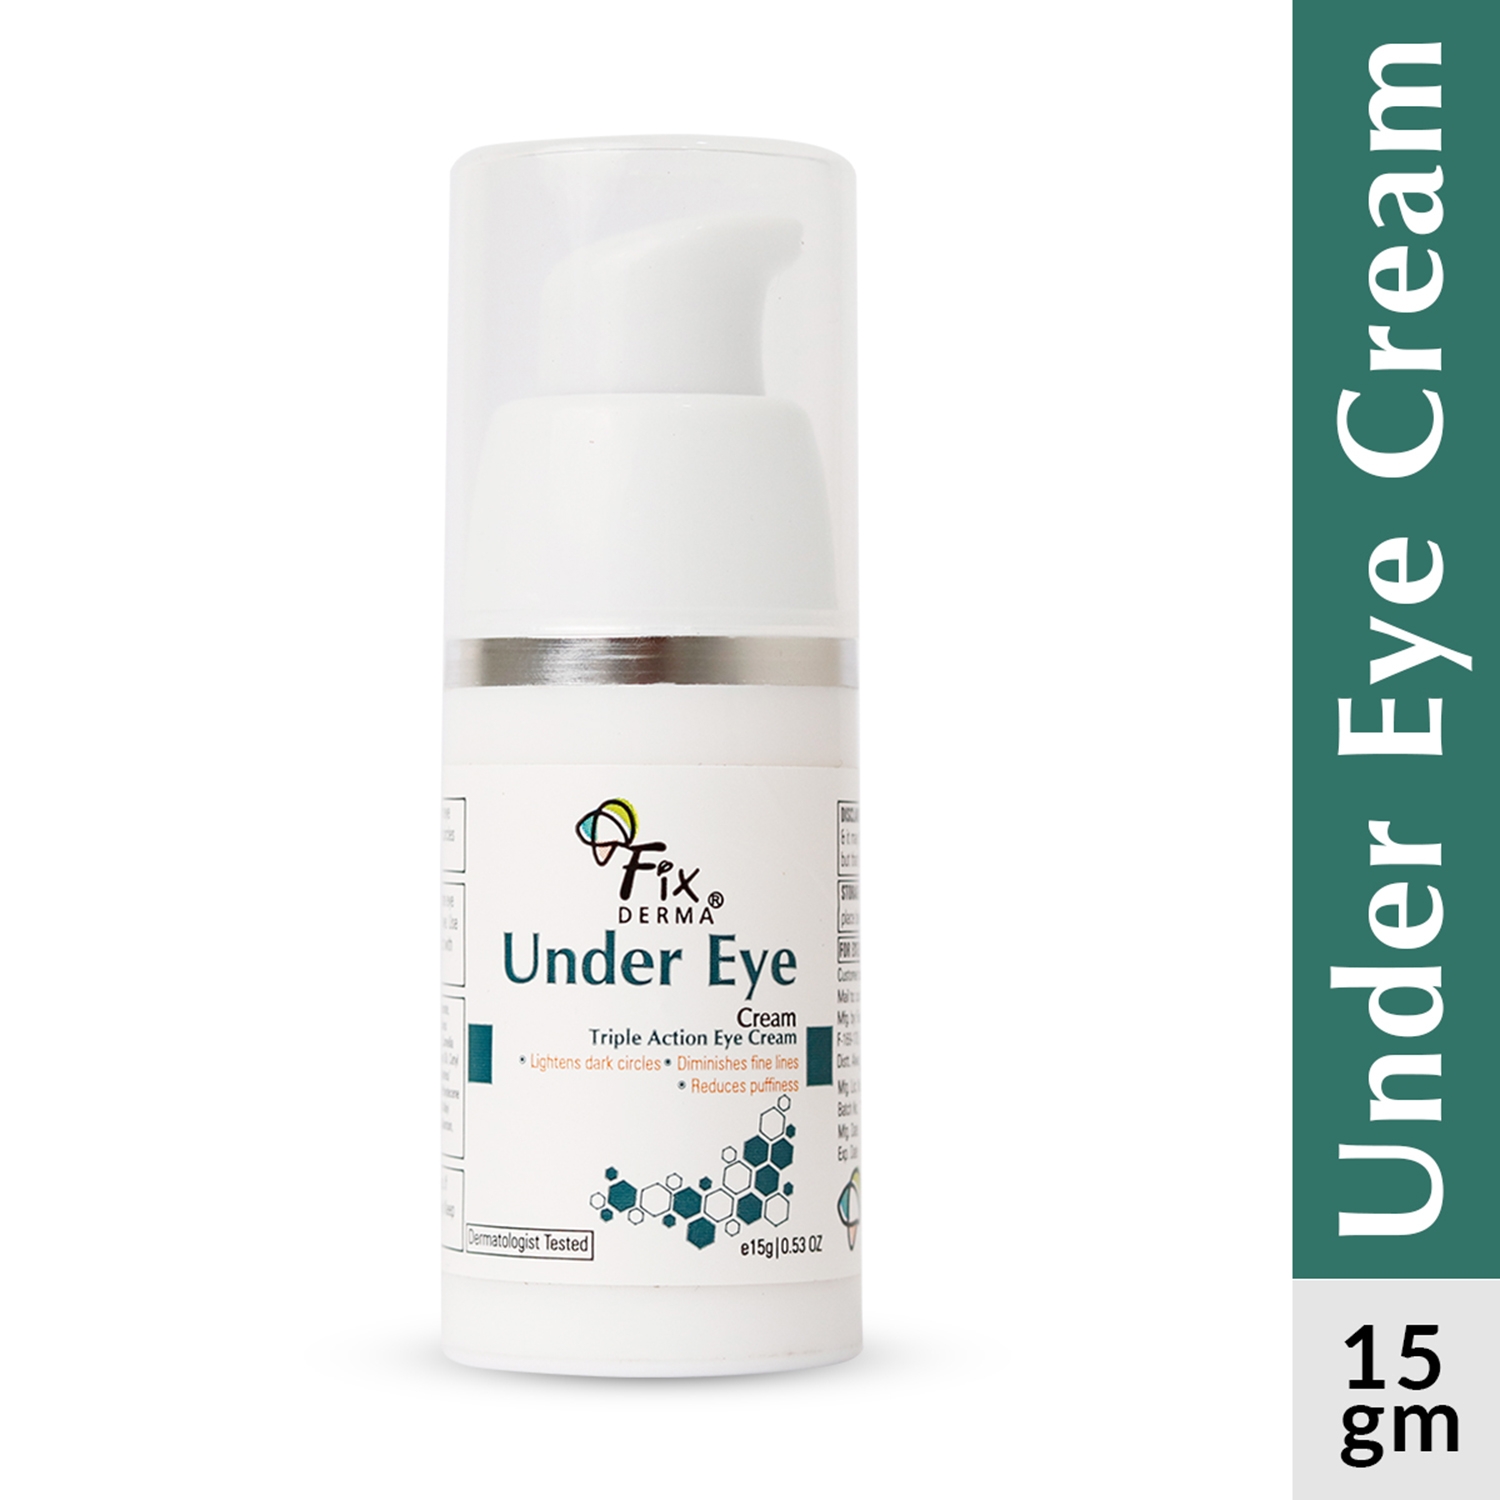 Fixderma Under Eye Triple Action Eye Cream (15g)